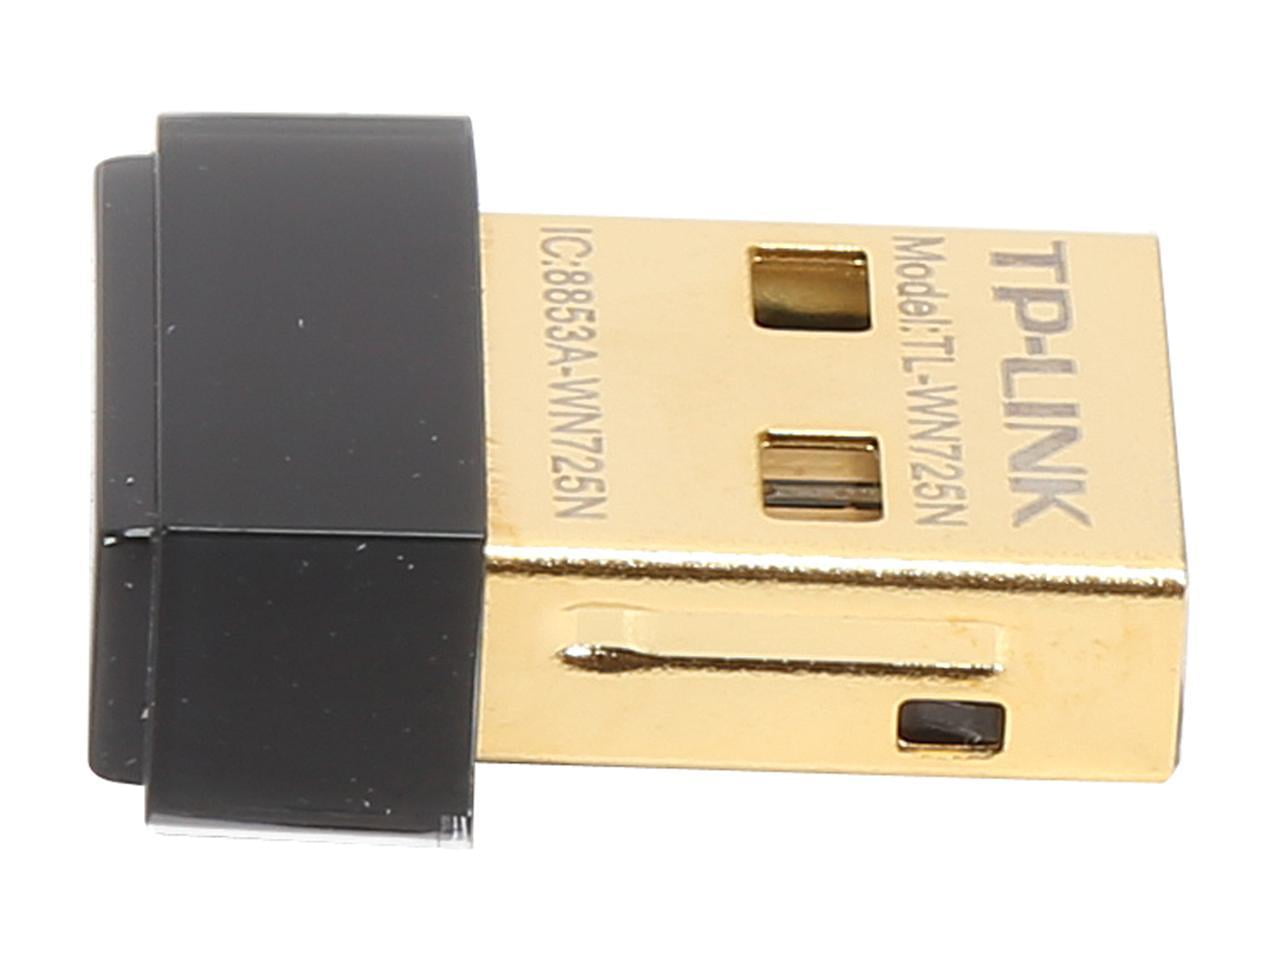 TP-LINK TL-WN725N Nano Wireless N150 Adapter, 150Mbps, IEEE 802.11b/g/n,  WEP, WPA / WPA2, Plug & Play in Windows 10 (32 bit & 64 bit)